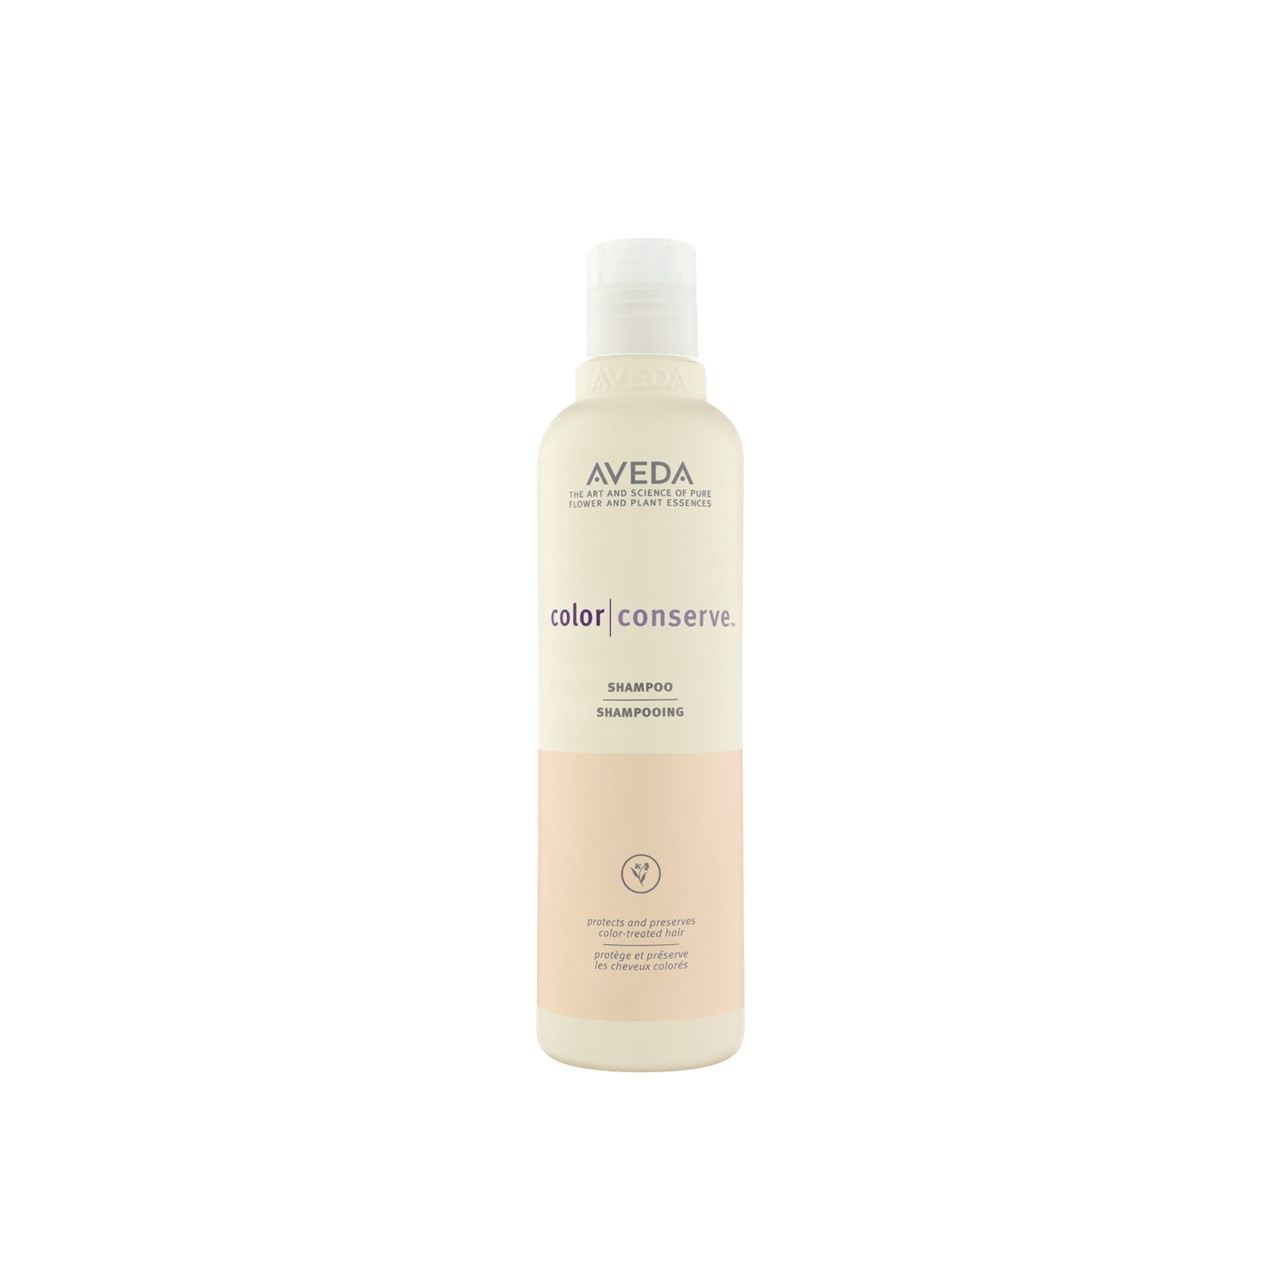 Aveda Color Conserve Shampoo 250ml (8.5 fl oz)